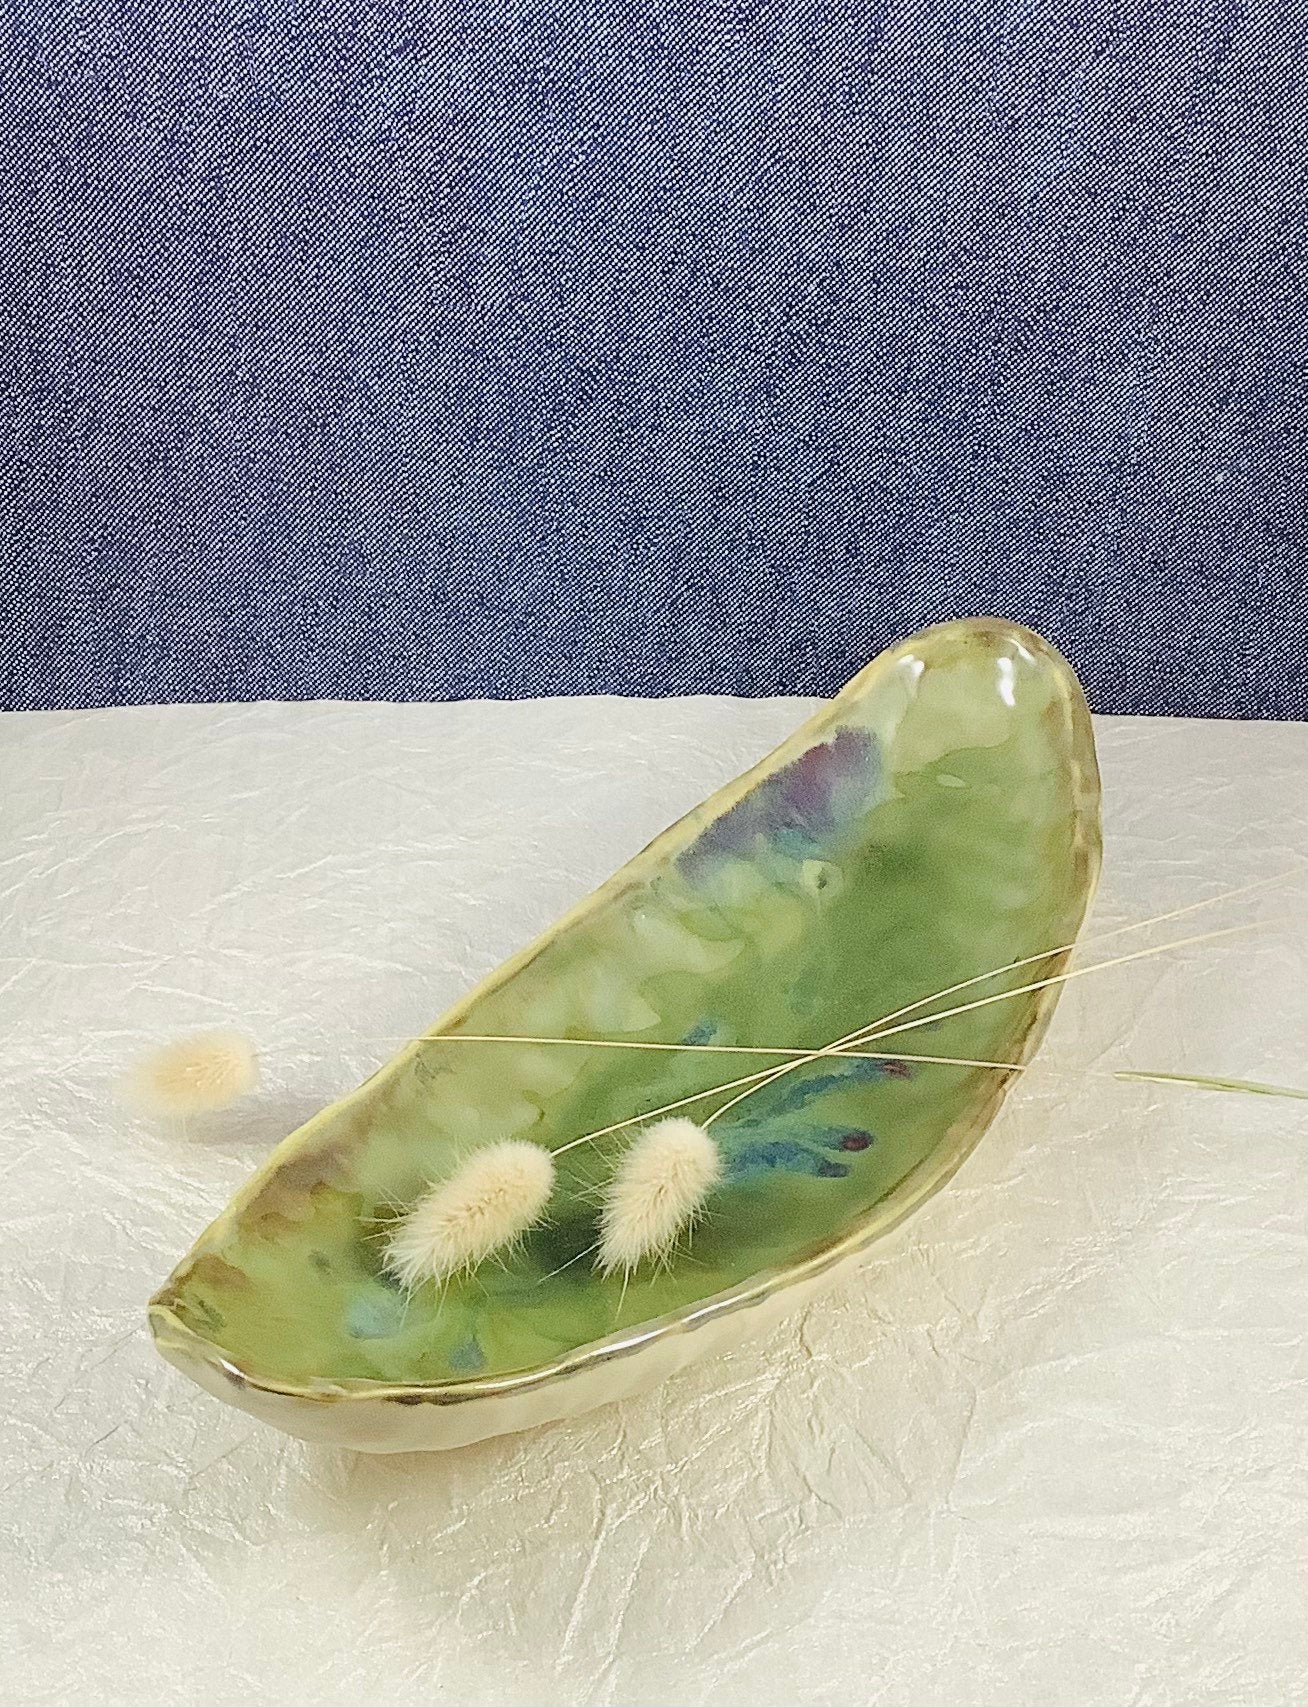 Canoe Ceramic Serving Dish - Olive Green